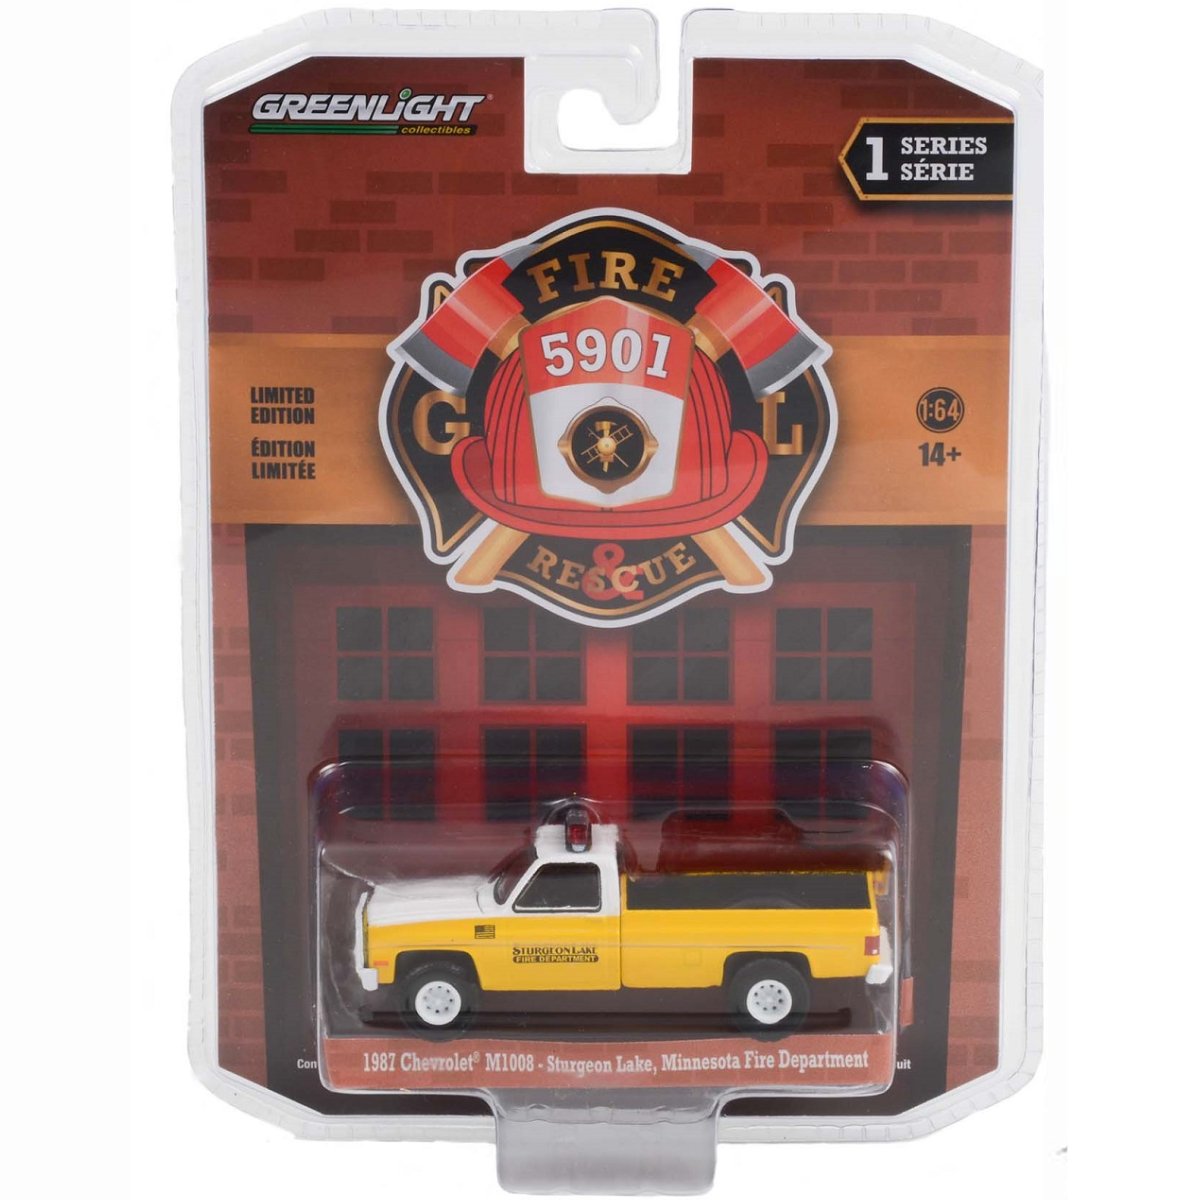 Greenlight 1987 Chevrolet M1008 Sturgeon Lake, Minnesota Fire Department - 1:64 Scale